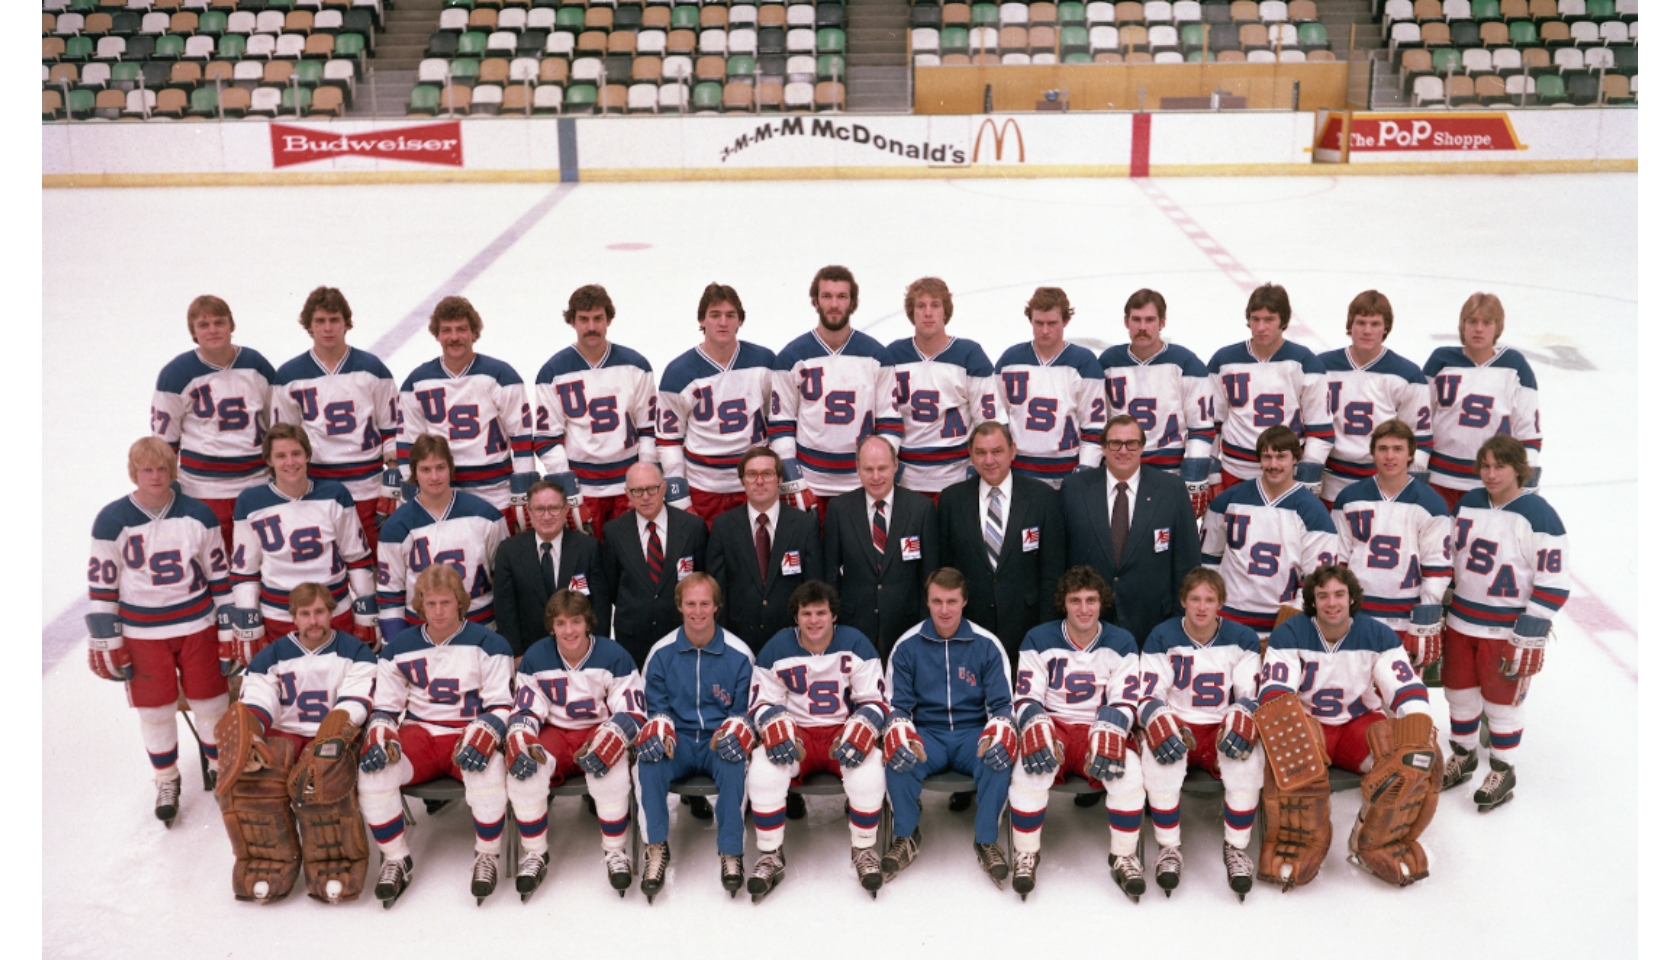 1980 U.S. Olympic Hockey Team Autographed (USA White #80) Custom Jerse –  Palm Beach Autographs LLC